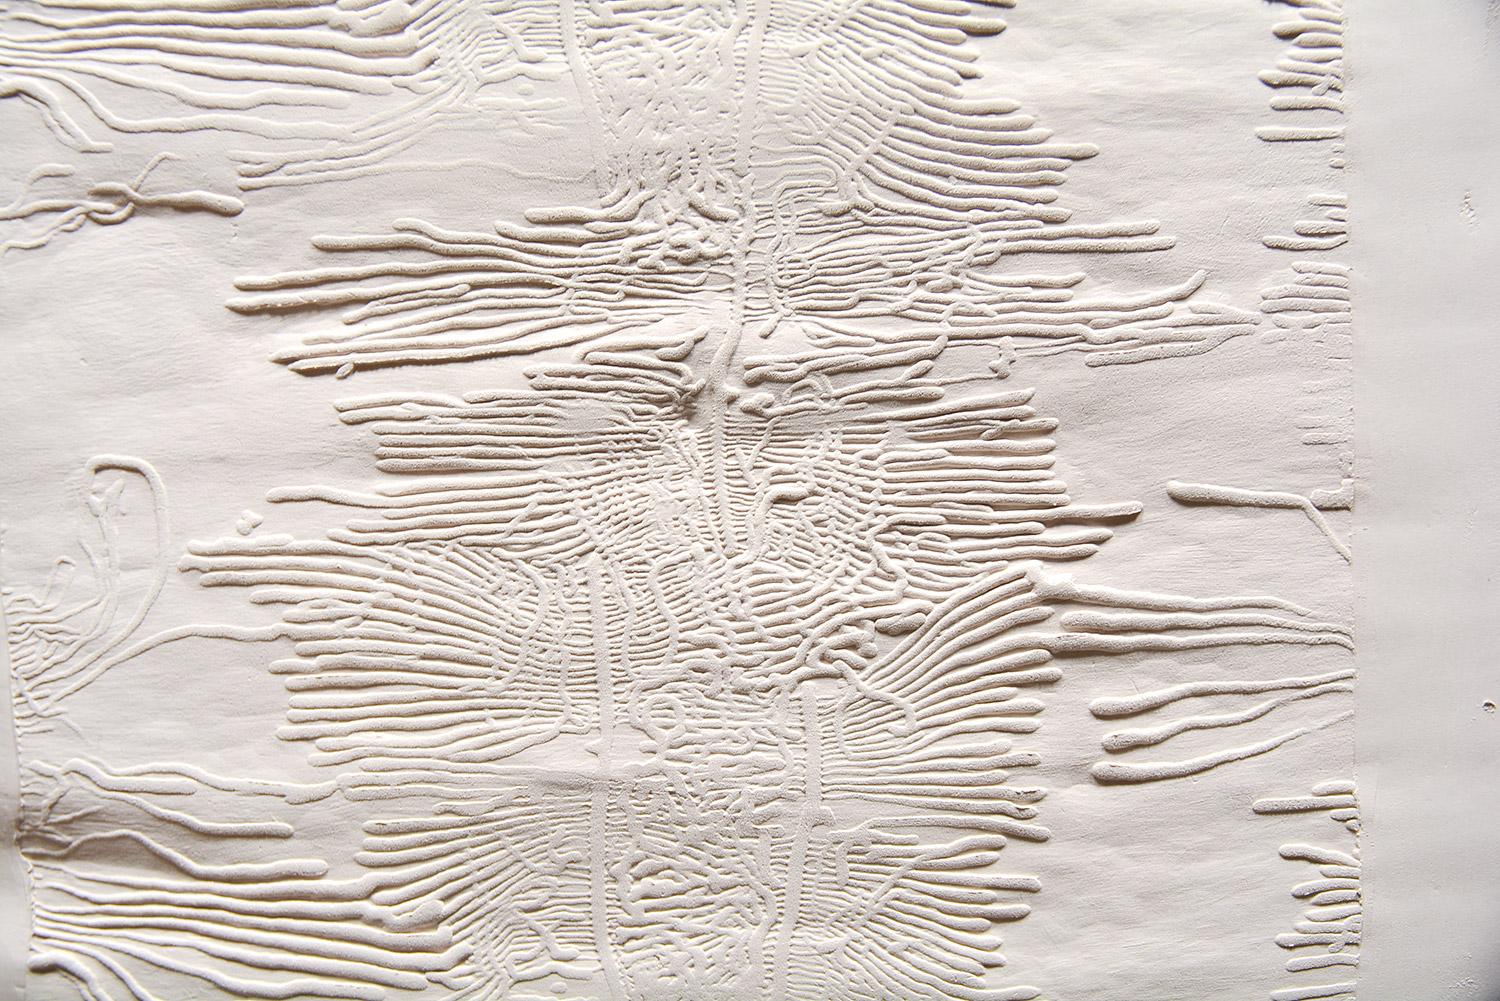 TRAÇAS 4 Ceramic Sculpture Wood Tracks Nature White Neutral Decoration Art  - Gray Abstract Sculpture by Patricia Lazcano Irazazábal